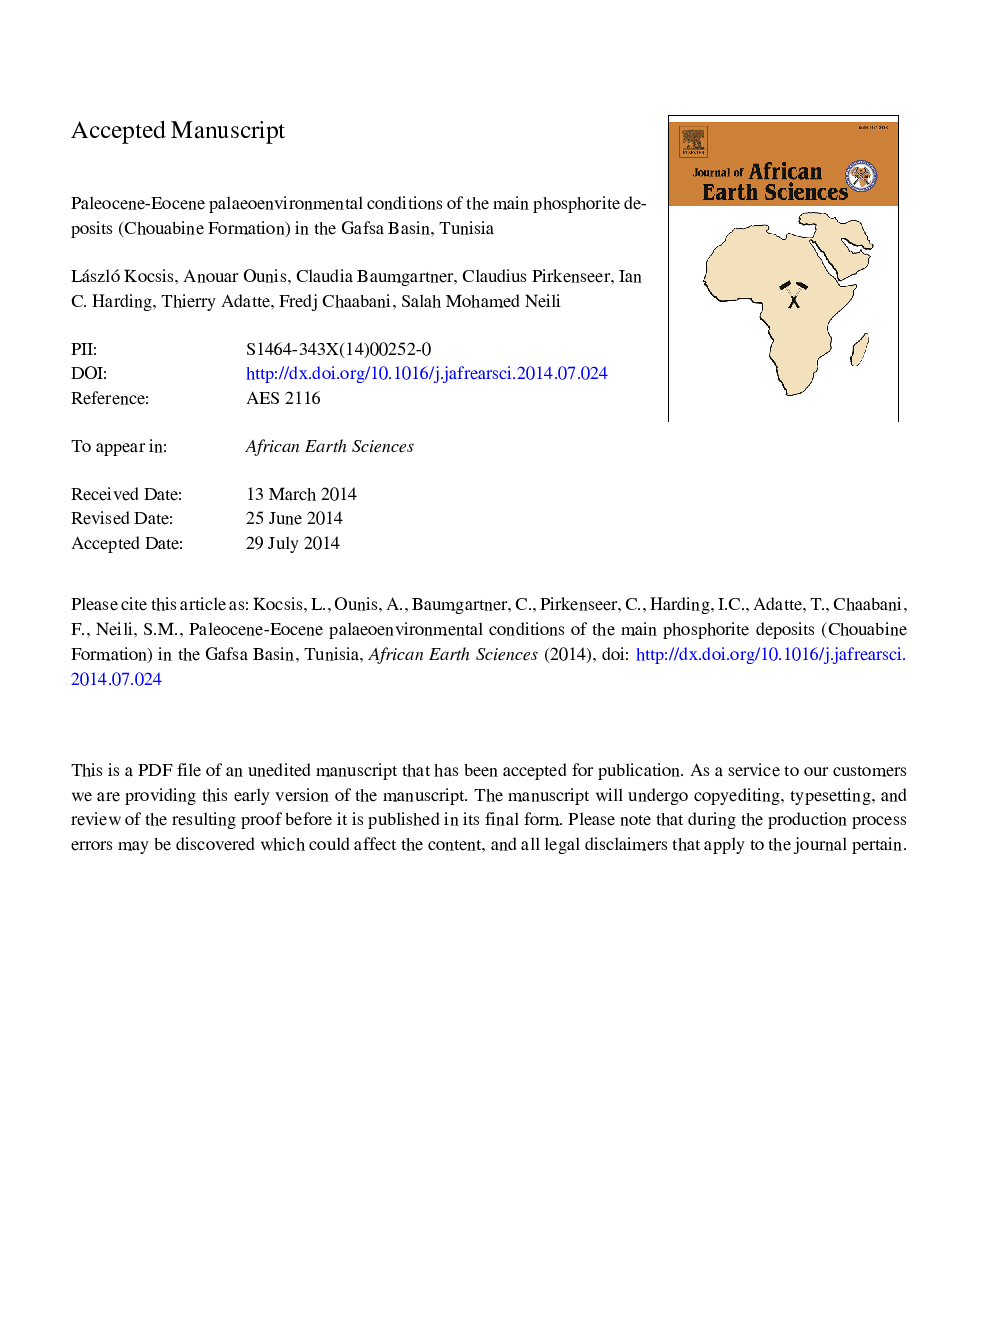 Paleocene-Eocene palaeoenvironmental conditions of the main phosphorite deposits (Chouabine Formation) in the Gafsa Basin, Tunisia